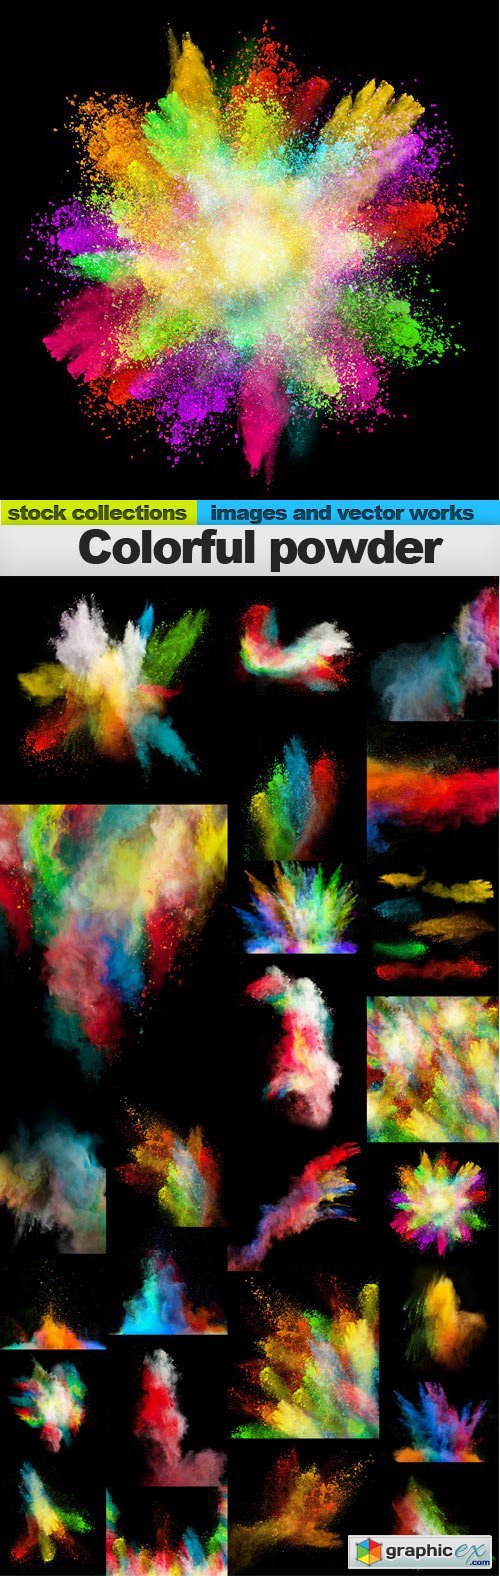 Colorful powder,25 x UHQ JPEG